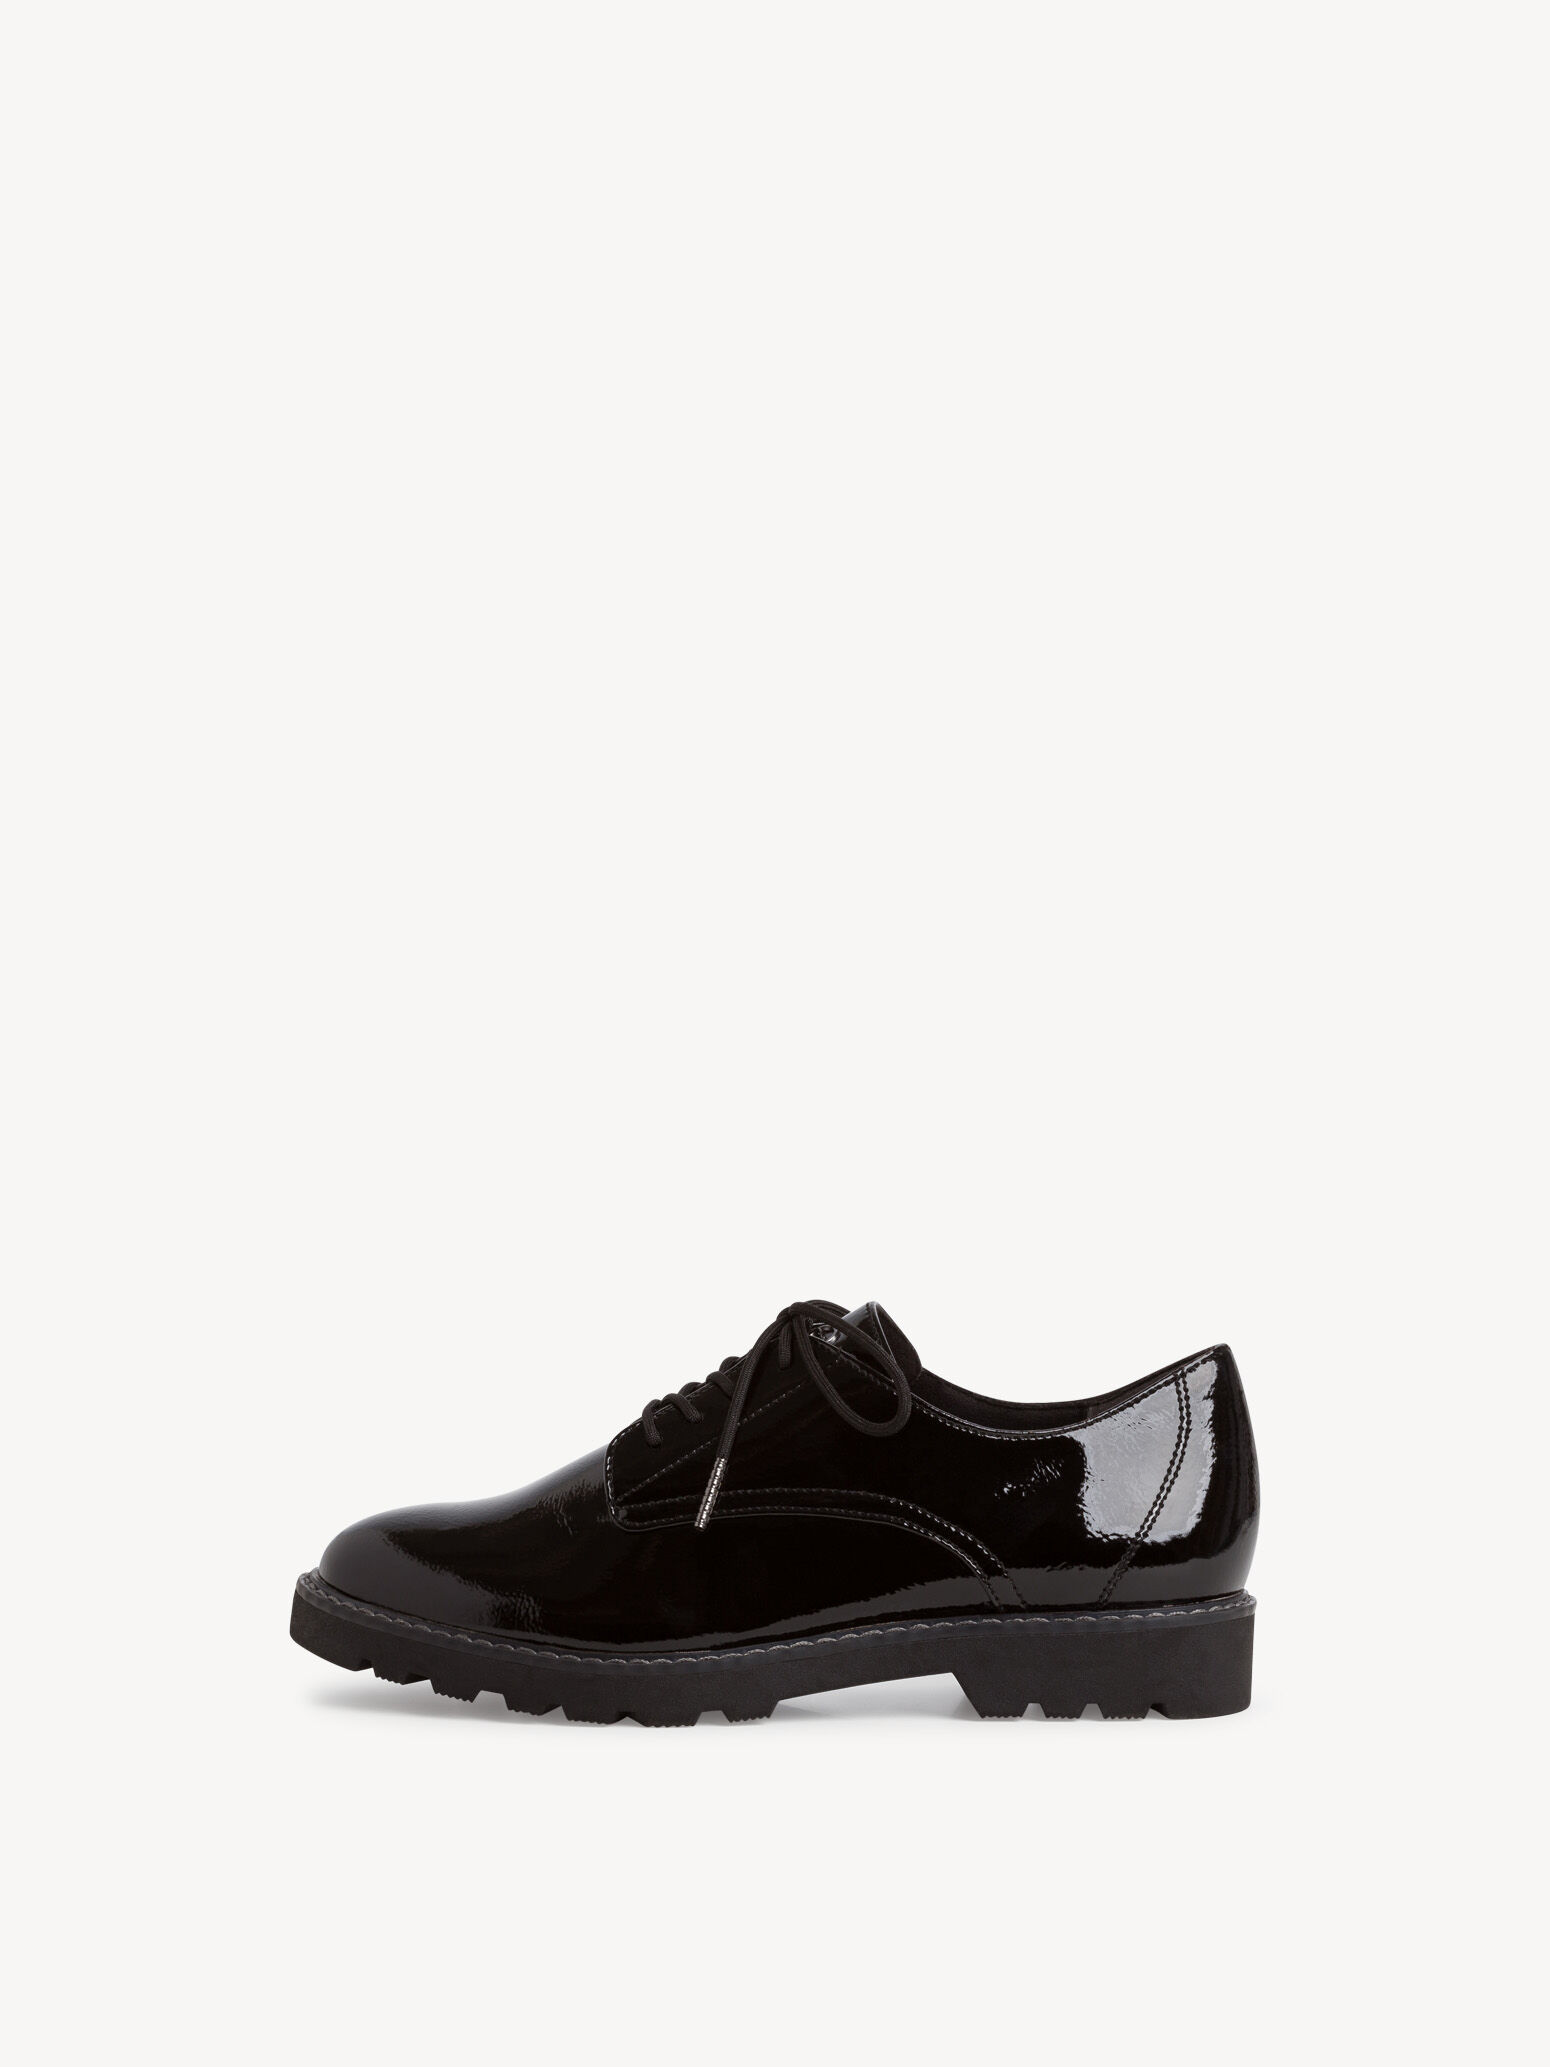 tamaris black patent shoes